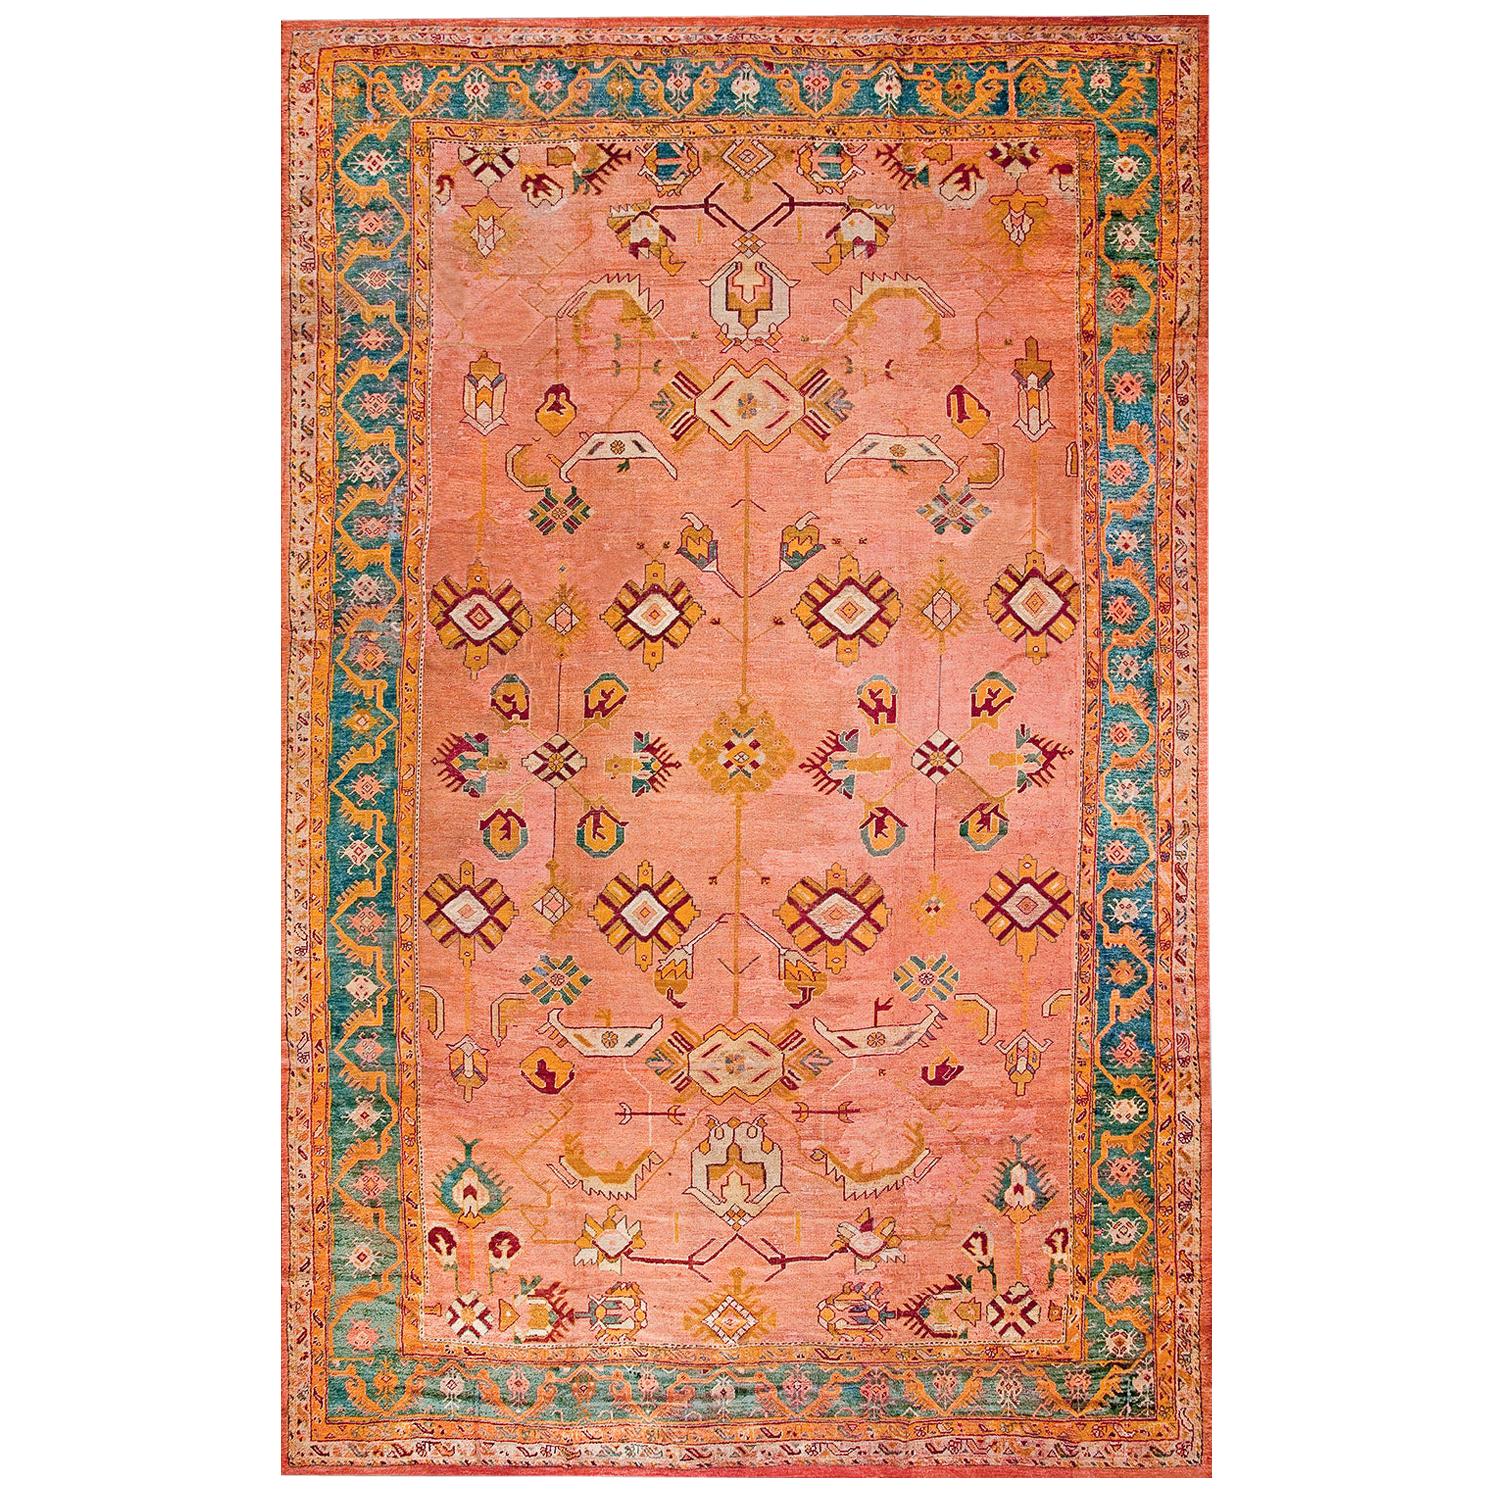 Late 19th Century Turkish Oushak Carpet ( 12'6" x 19'6" - 381 x 594 ) For Sale